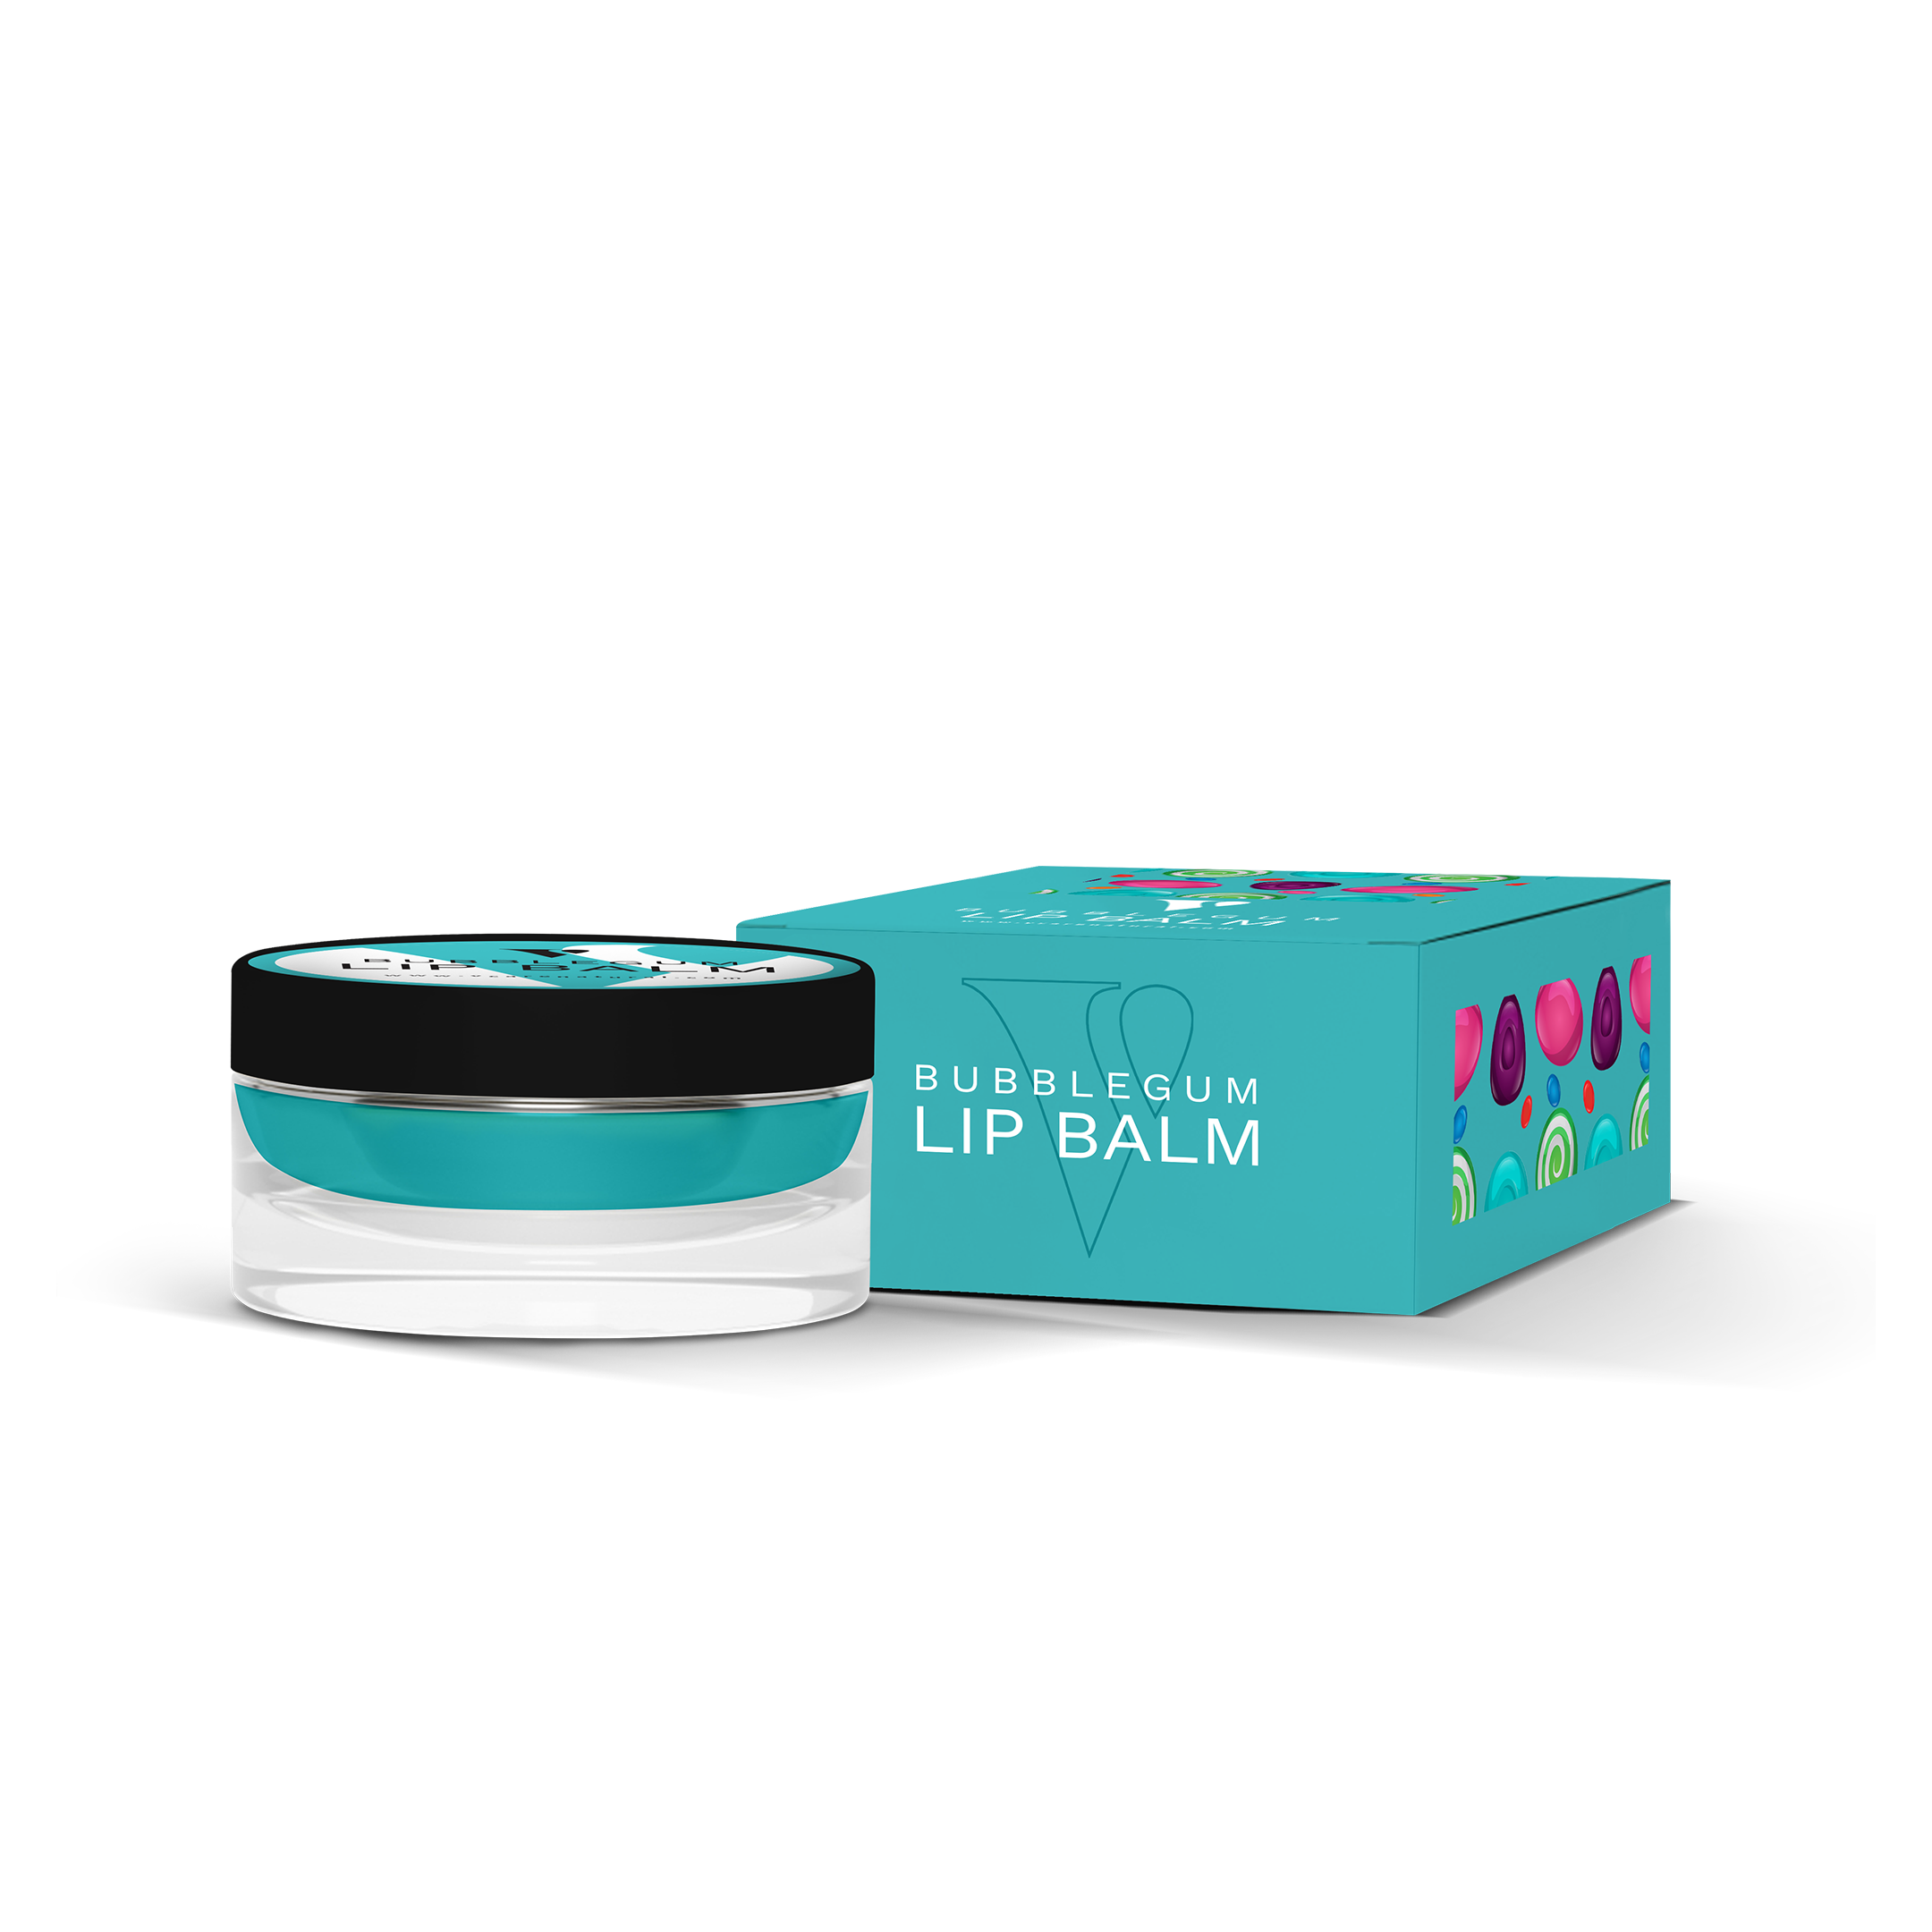 VCARE Natural Lip Balm - Bubblegum www.vcarenatural.com